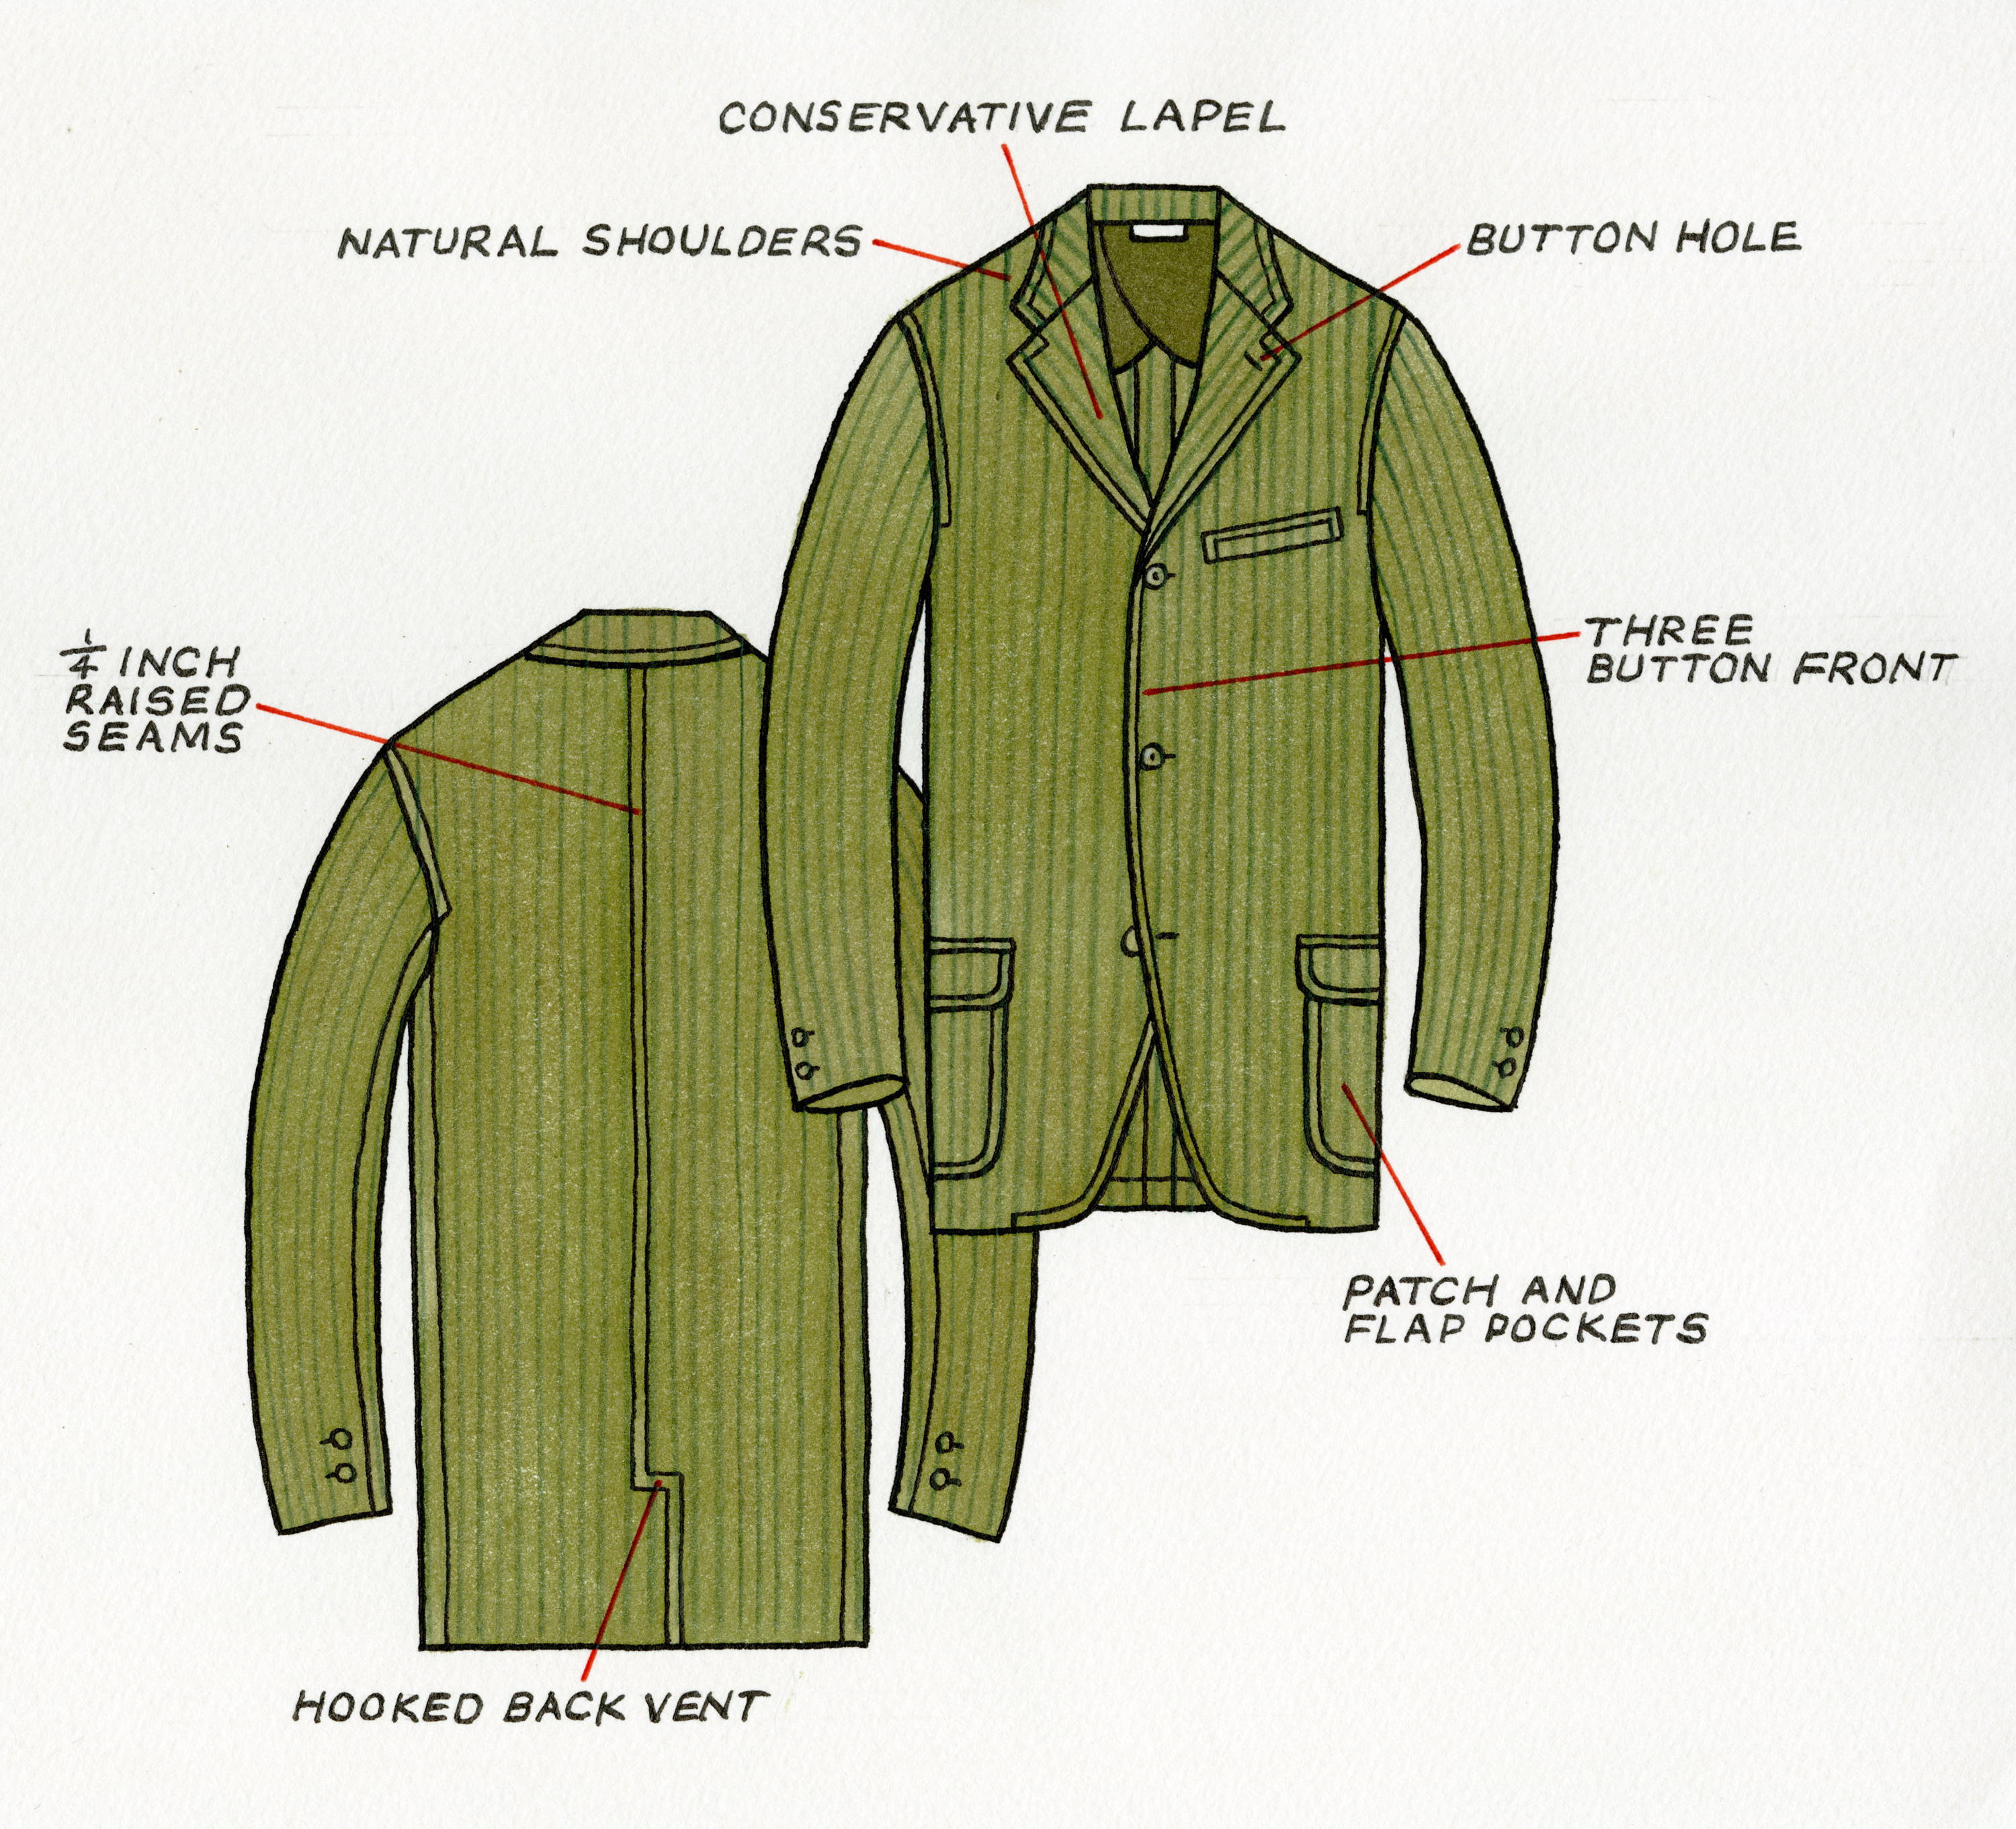 1950s Pattern, Men's Sports Jacket, Blazer – Vintage Sewing